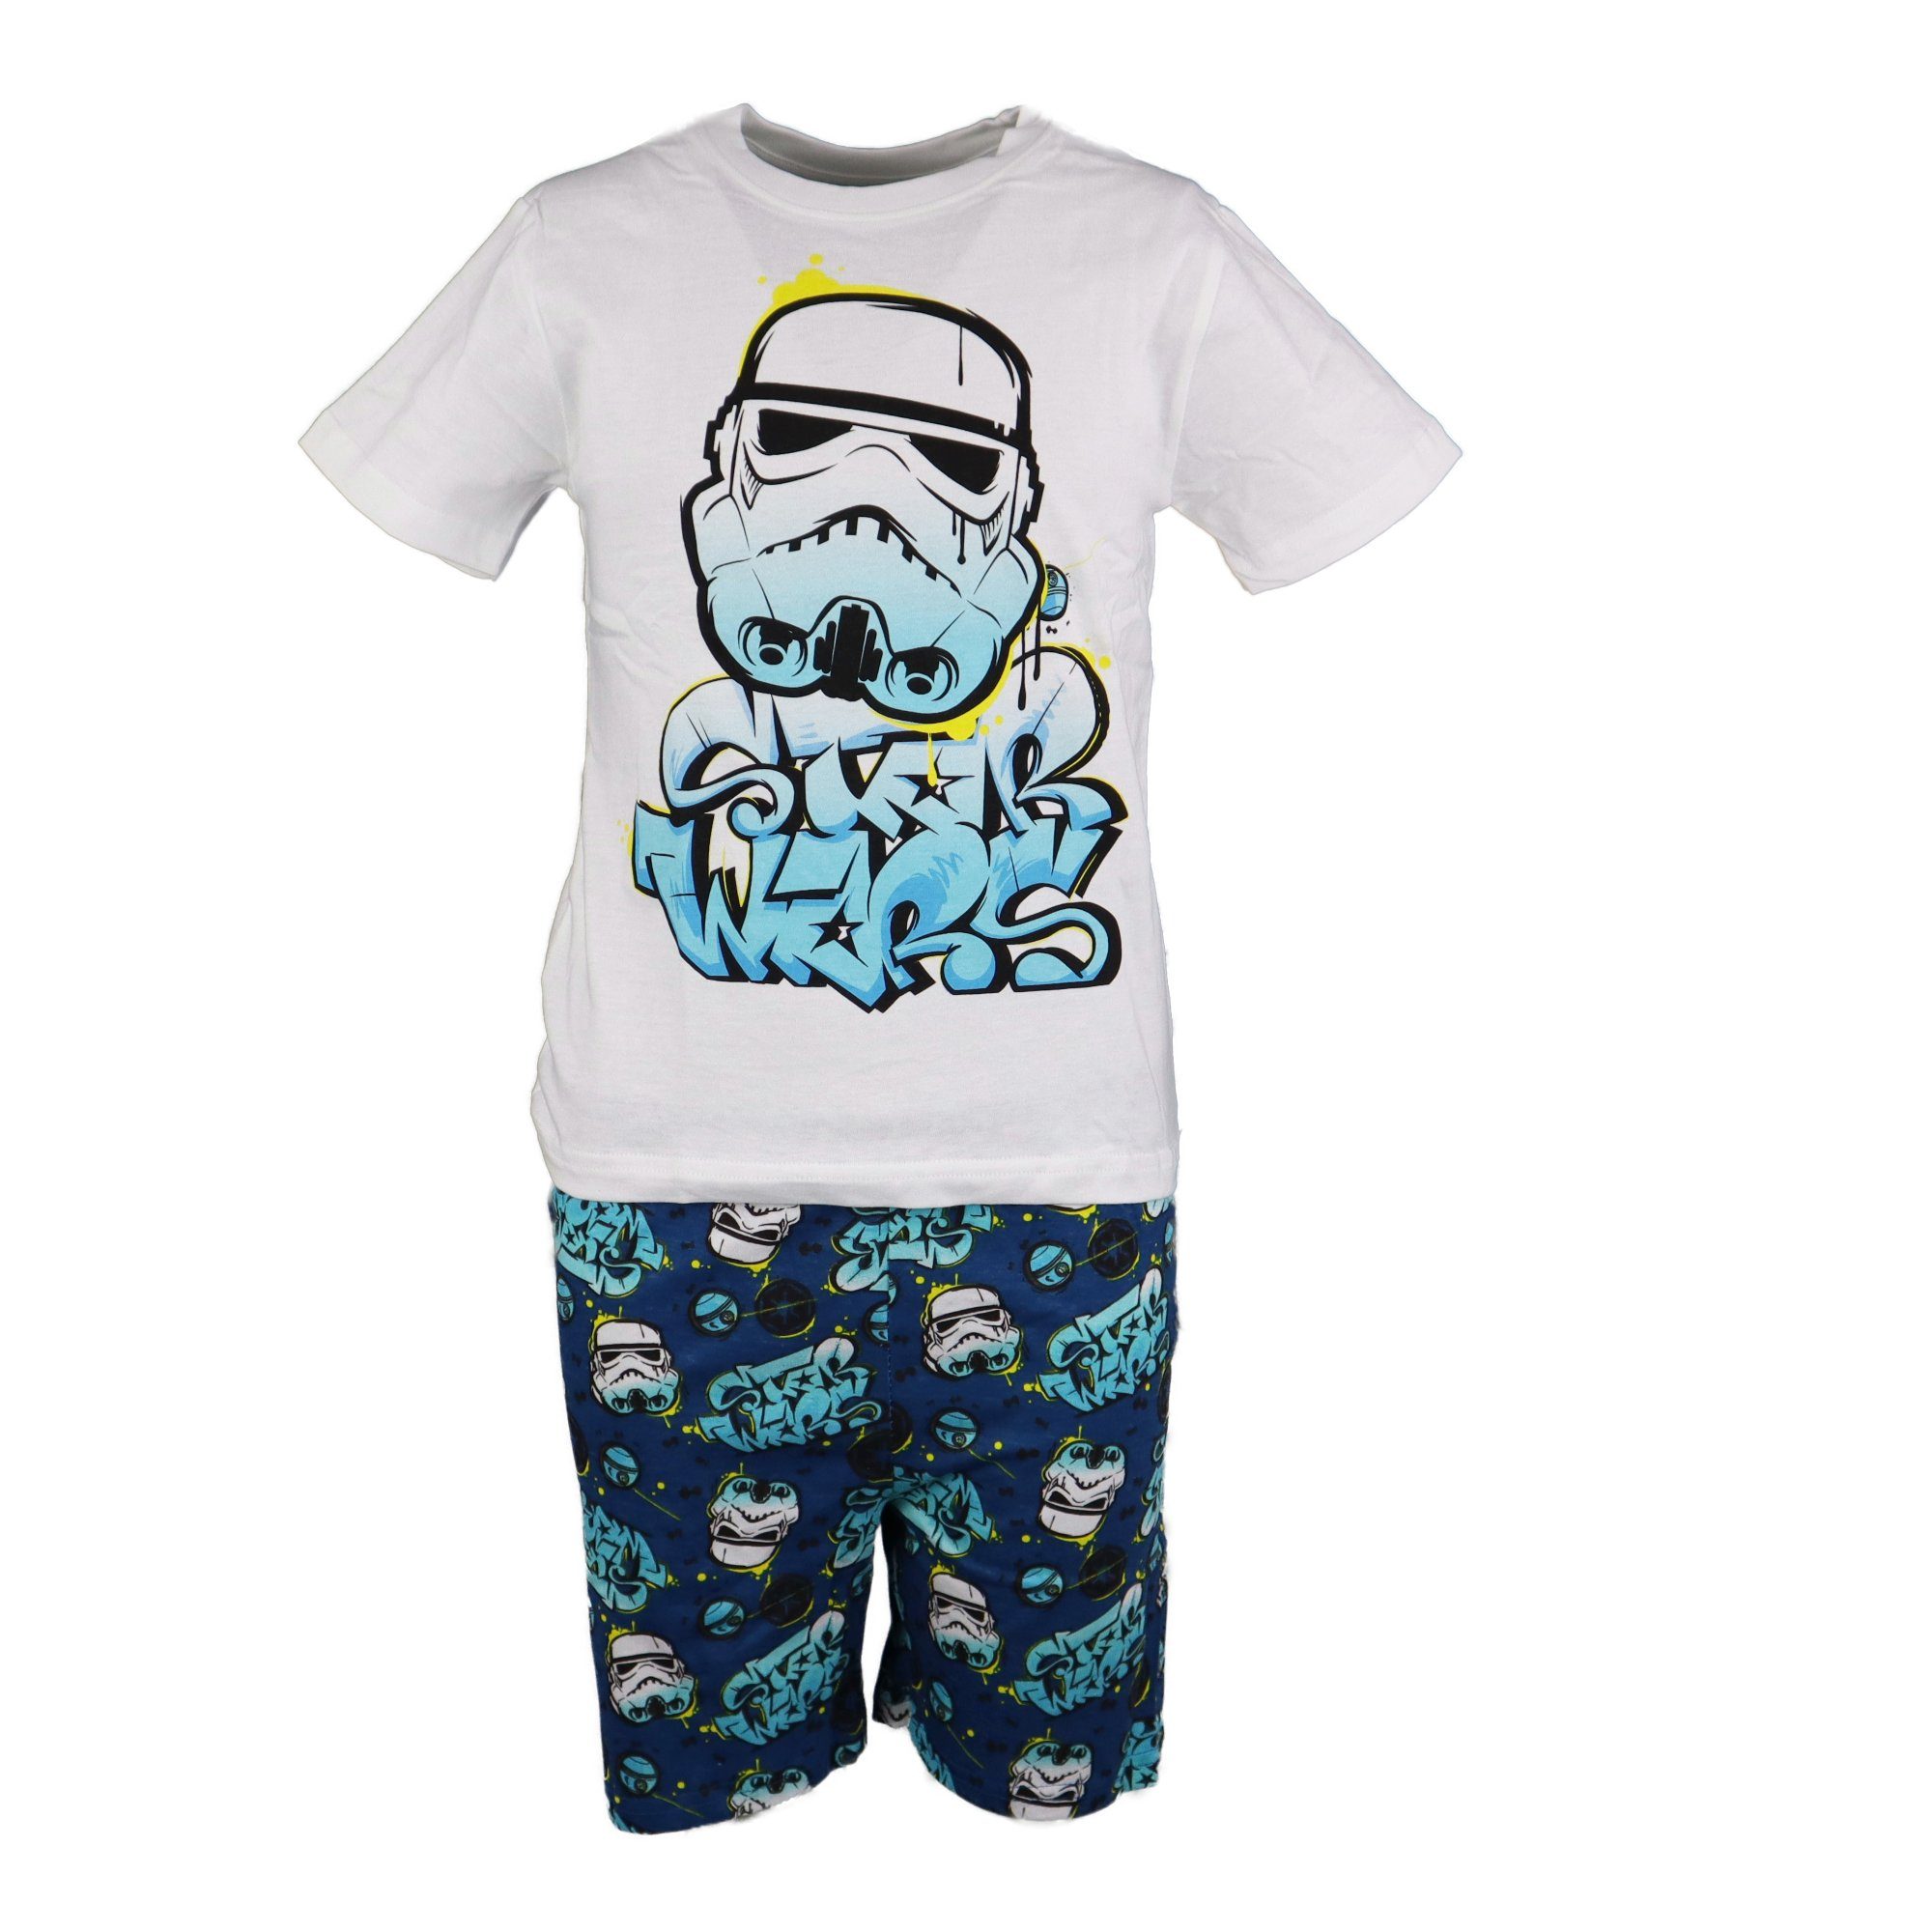 Star Wars Schlafanzug Storm Trooper kurz Gr. 140, bis Pyjama Baumwolle Kinder 110 Bunt 100